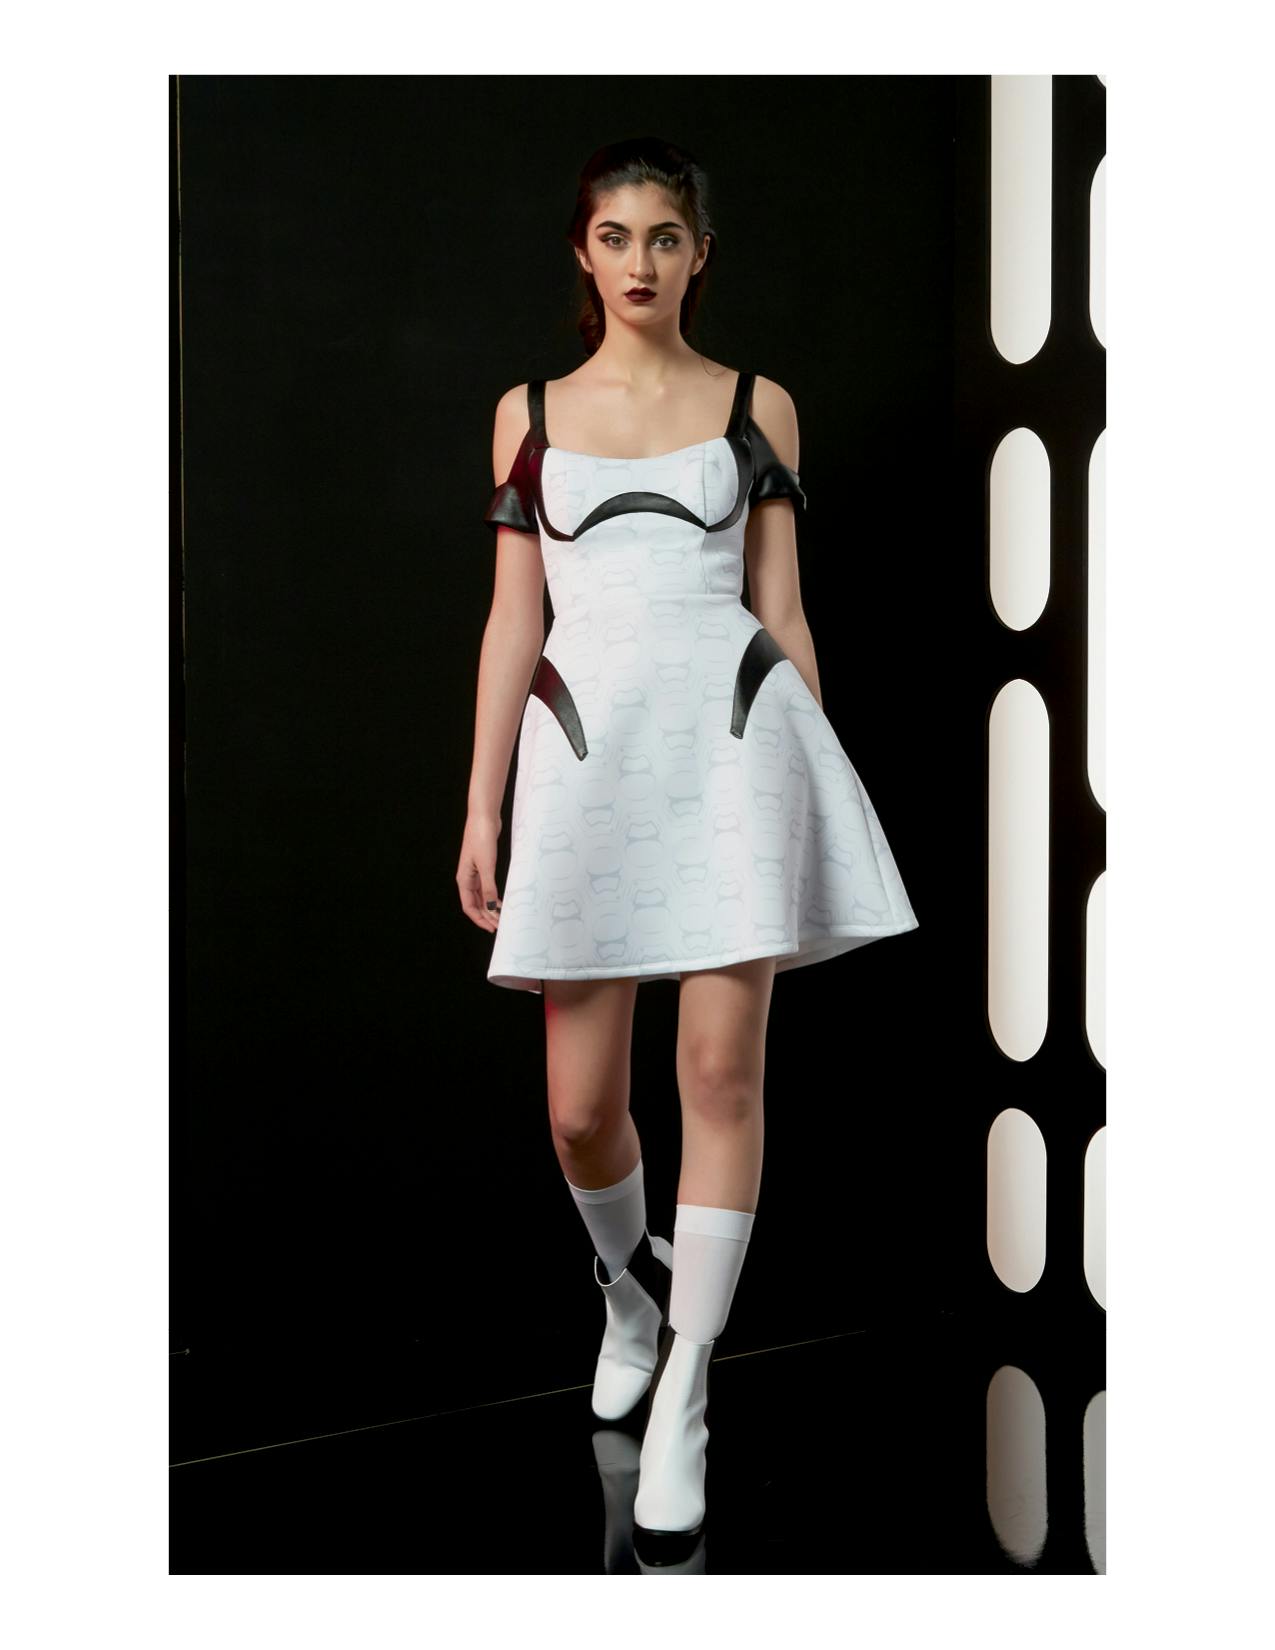 Stormtrooper Dress - $59.50